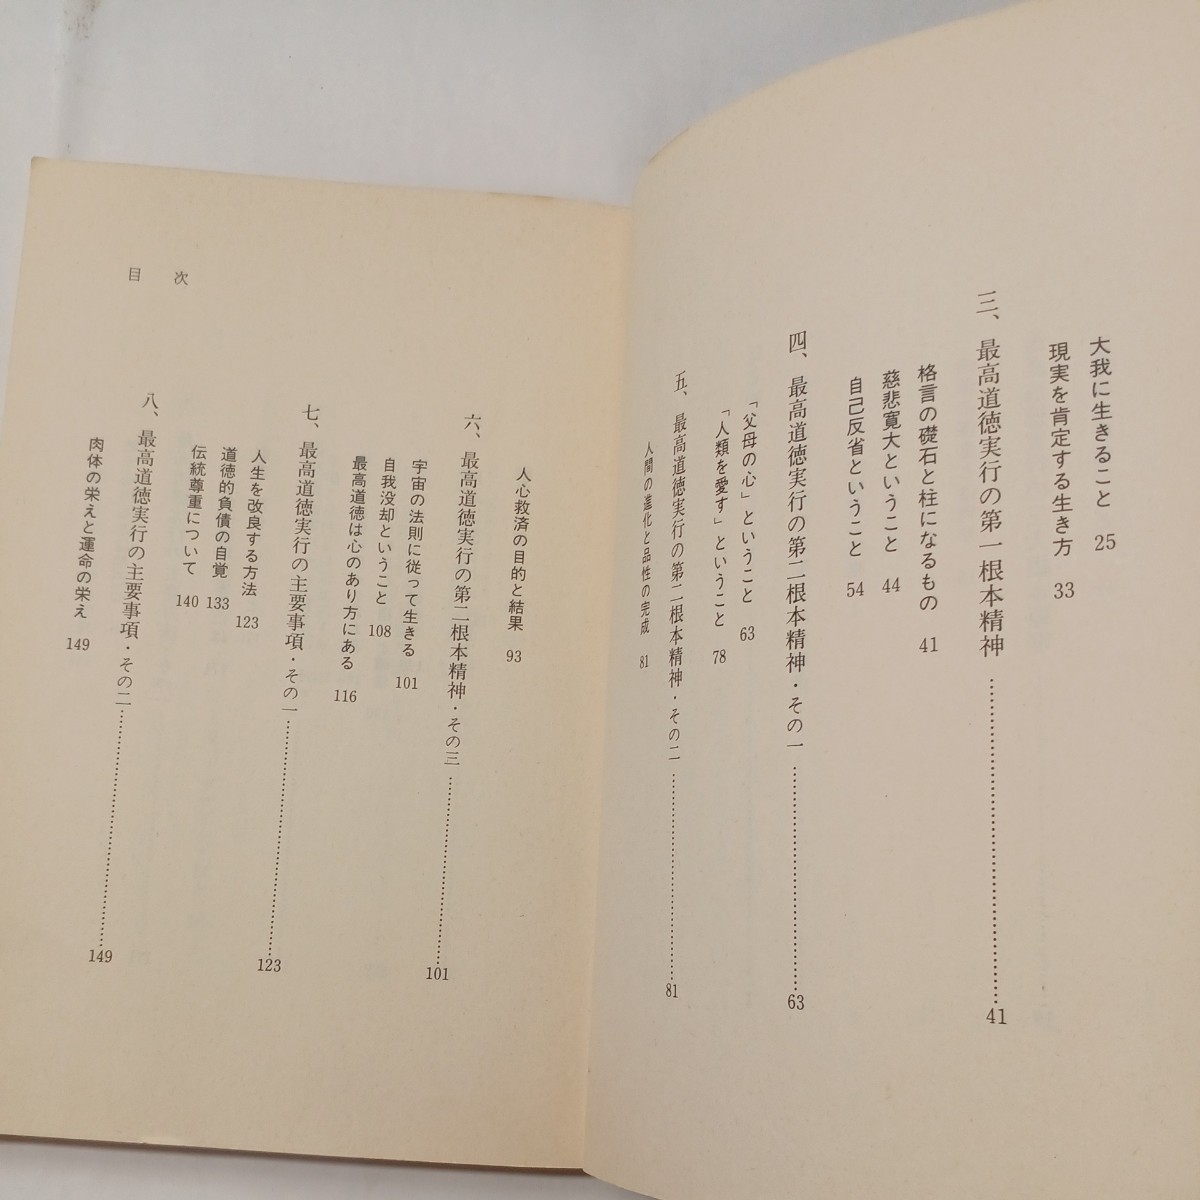 zaa-512♪天爵への道標 伊藤忠也(著)　 広池学園出版部 　 昭和61年2月10日 初版発行